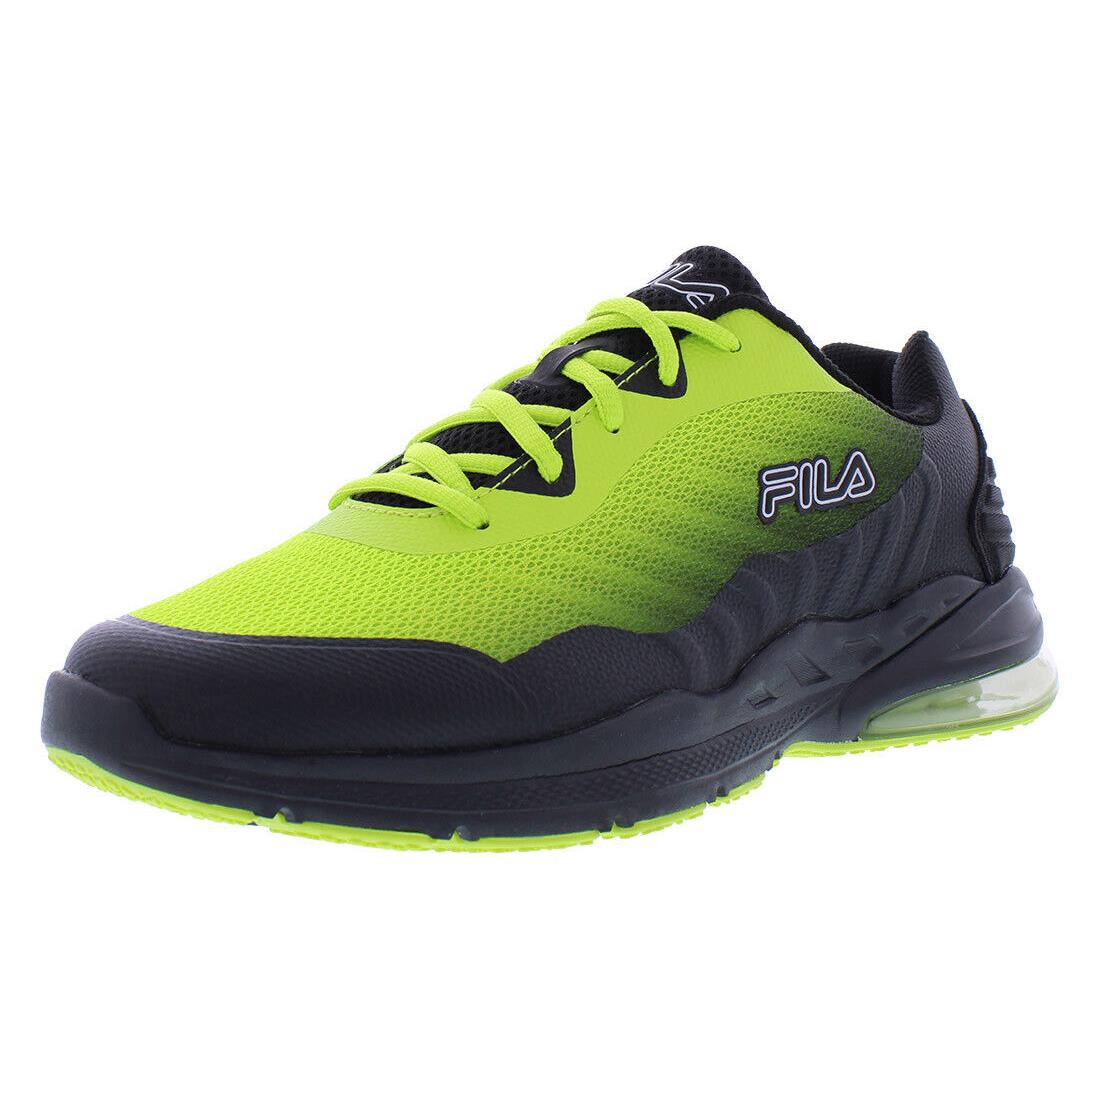 Fila Acumen Viz 2 Mens Shoes - Neon/Black, Main: Green